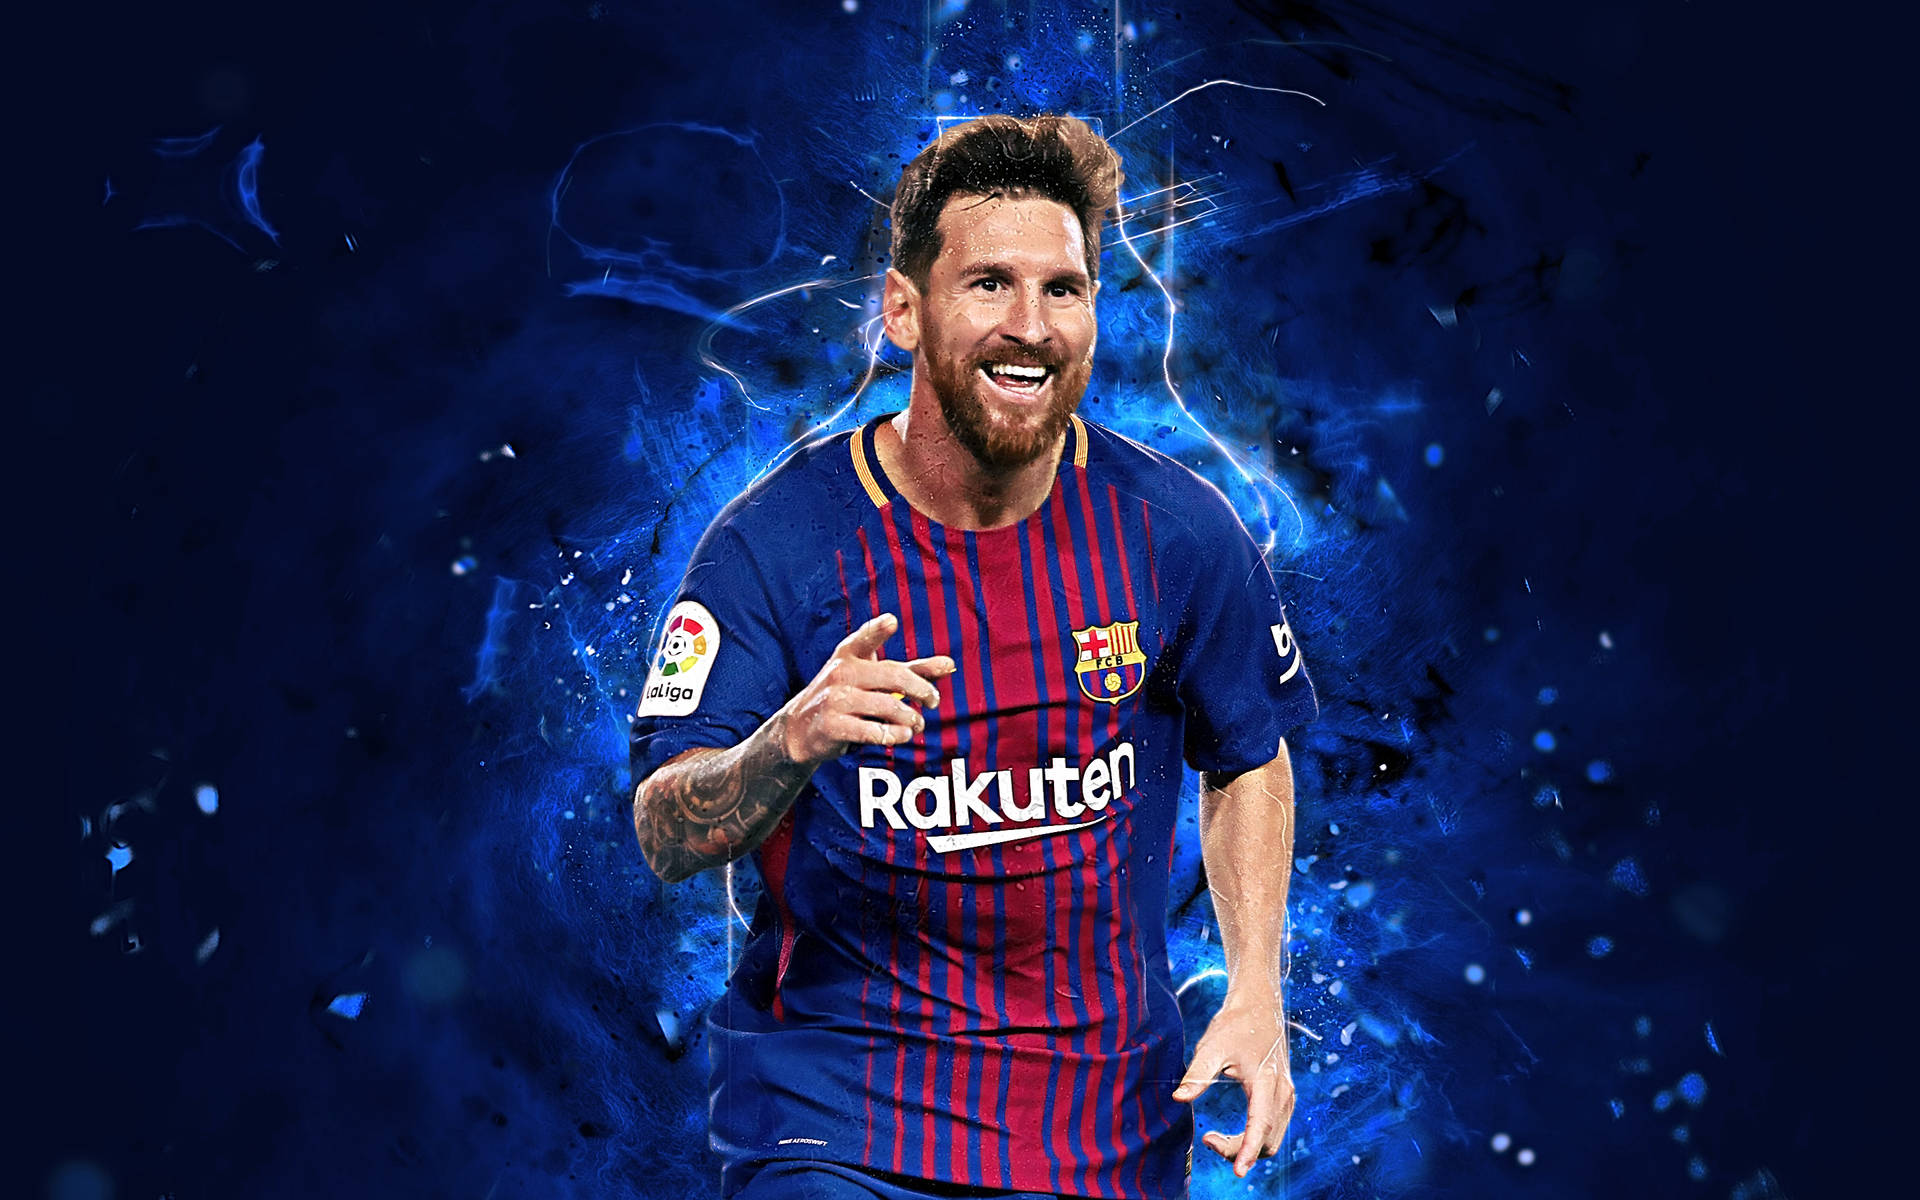 Smiling Lionel Messi 2020 Background